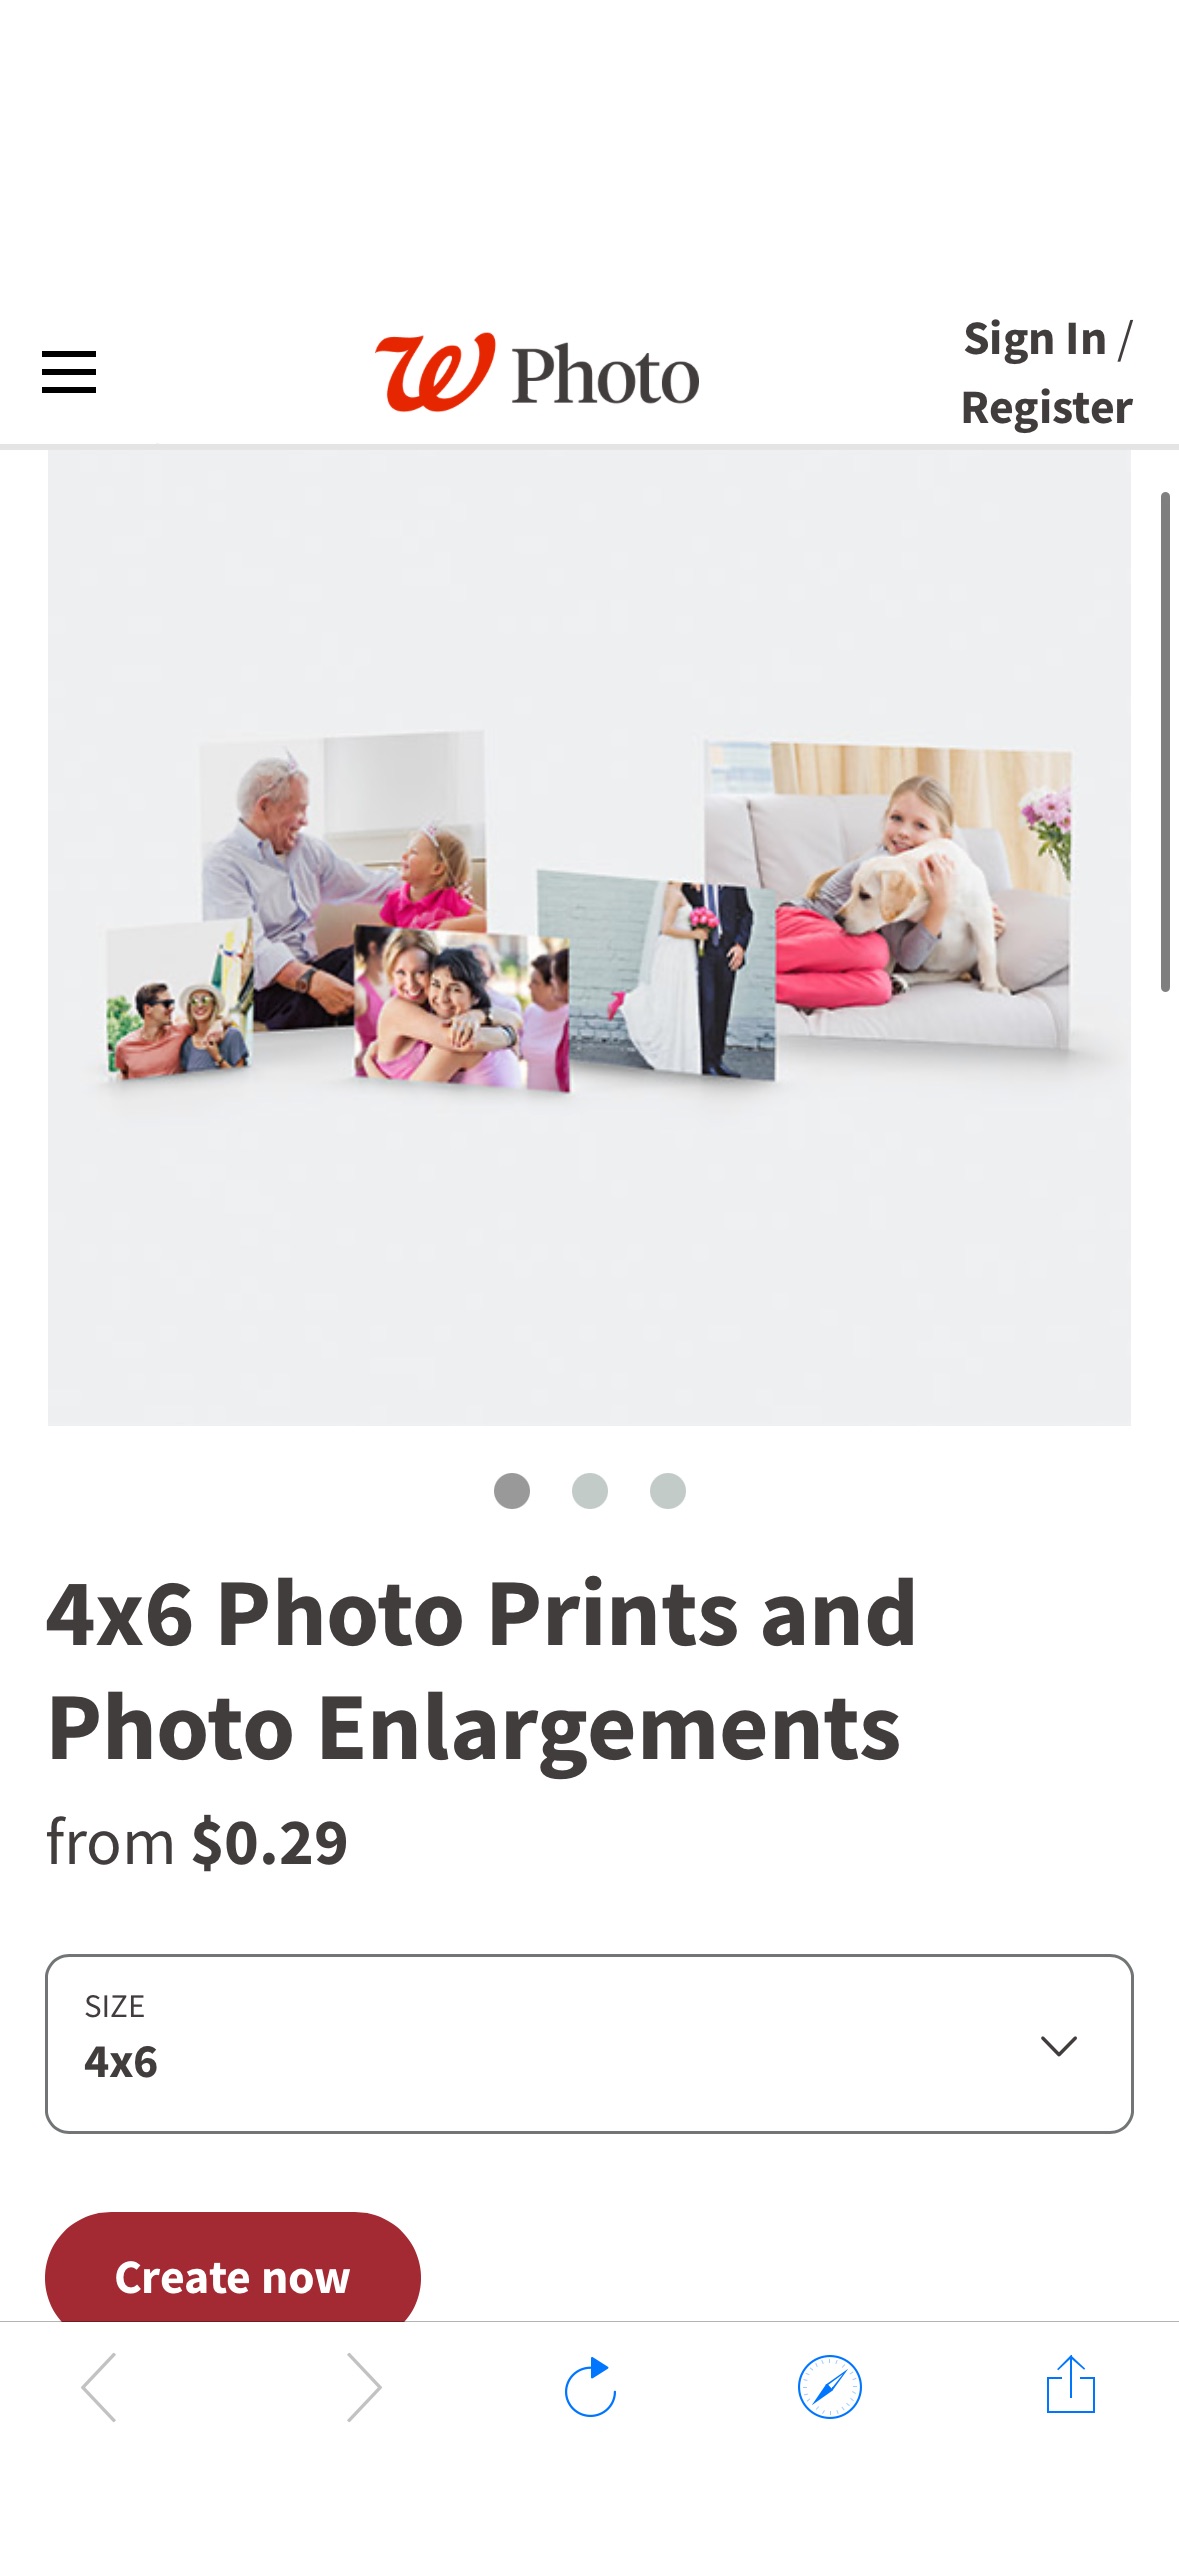 2 FREE 5x7 Photo Prints with FREE Same Day Pickup at Walgreens